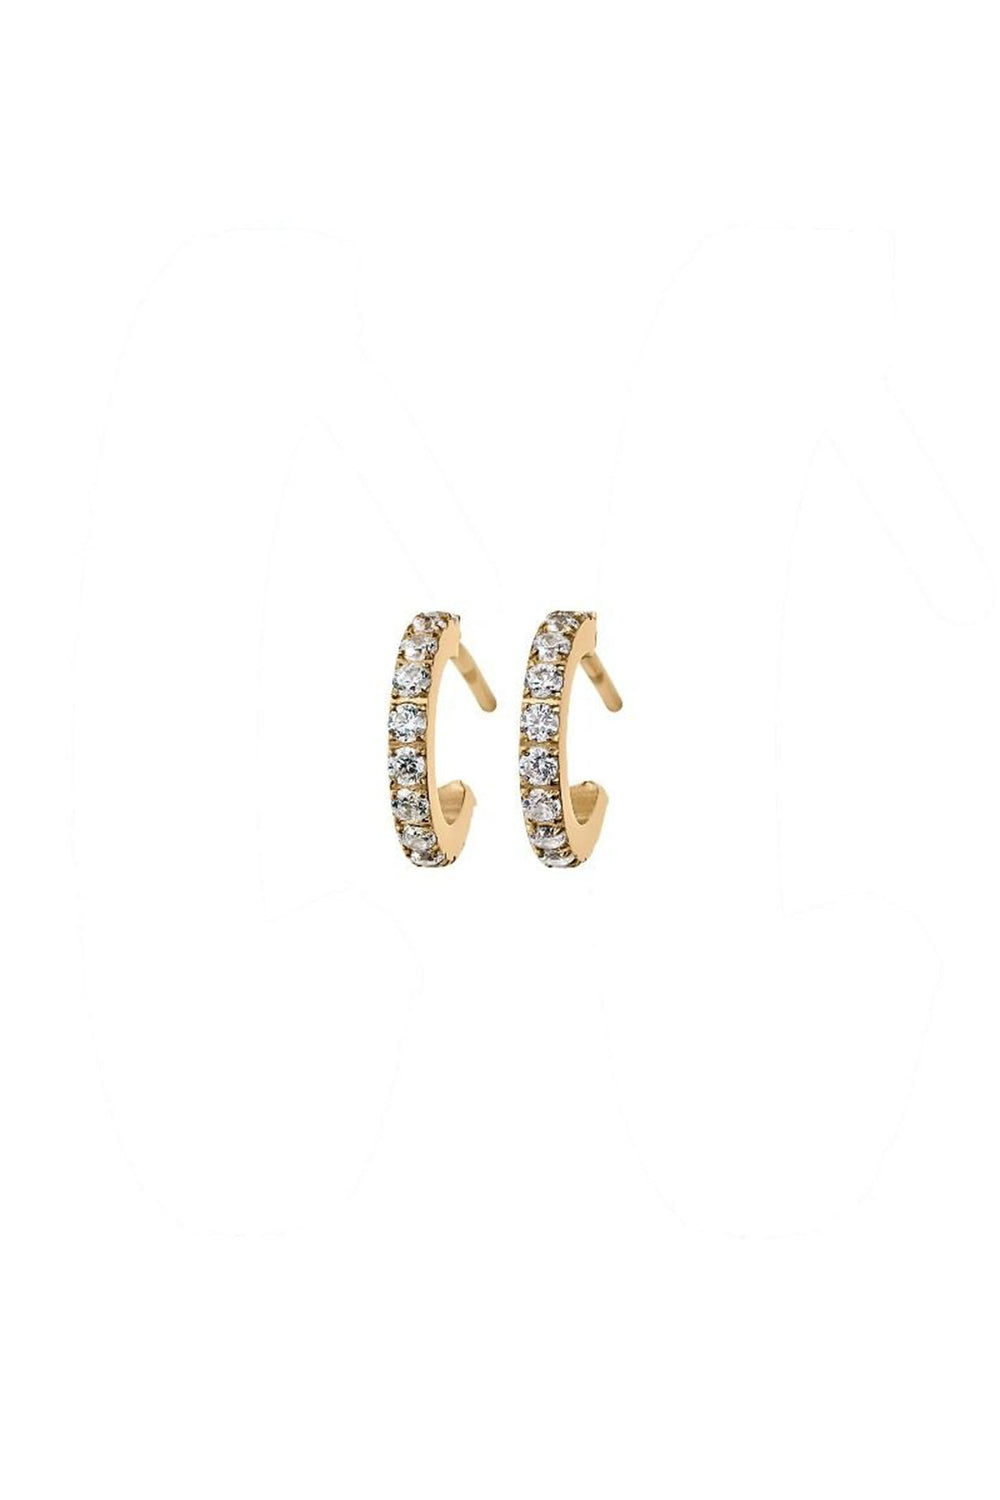 Edblad 120407 Glow Mini Gold Earrings - Olivia Grace Fashion